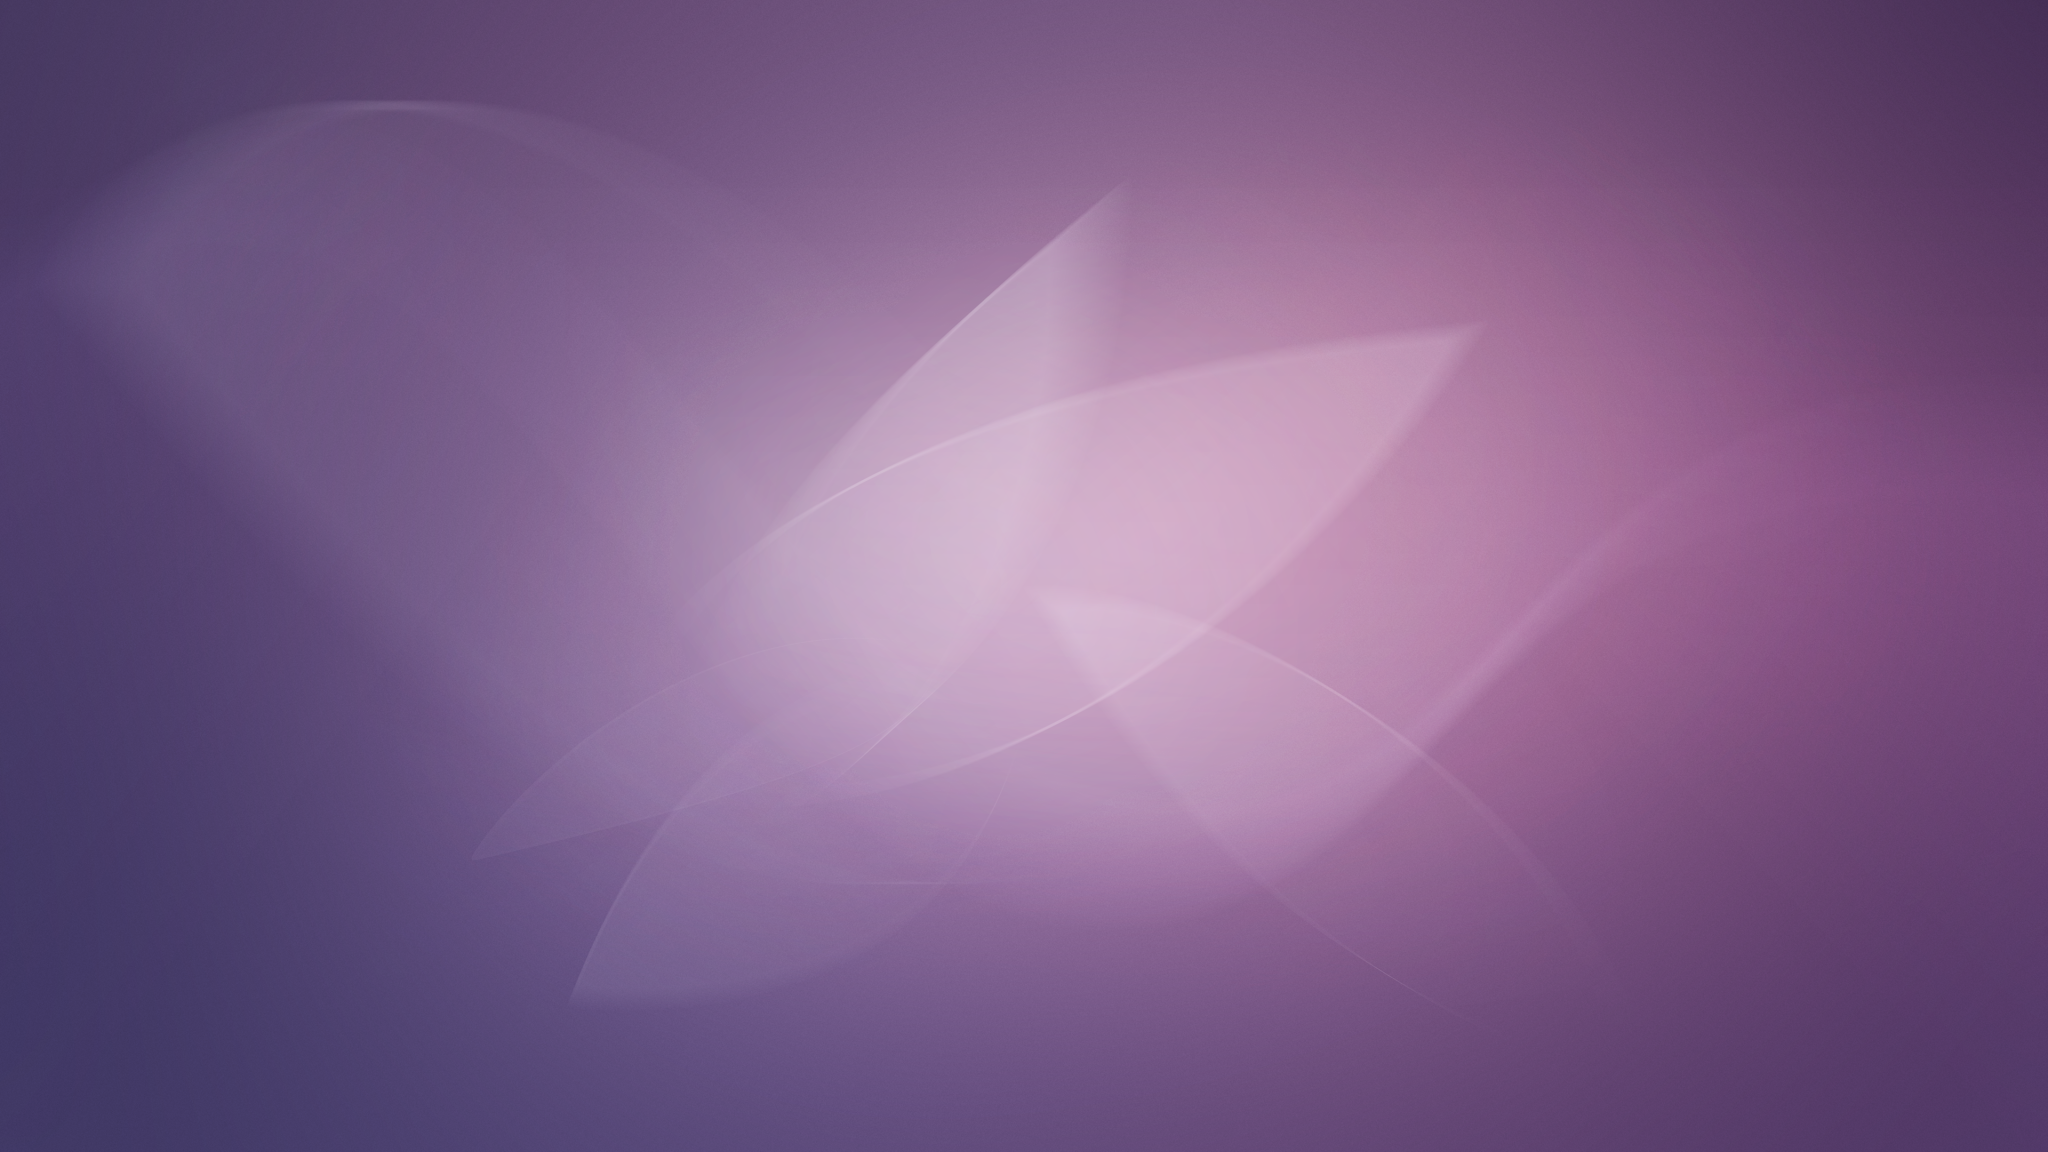 Ubuntu Corner: Debian Violet Fluid Wallpaper